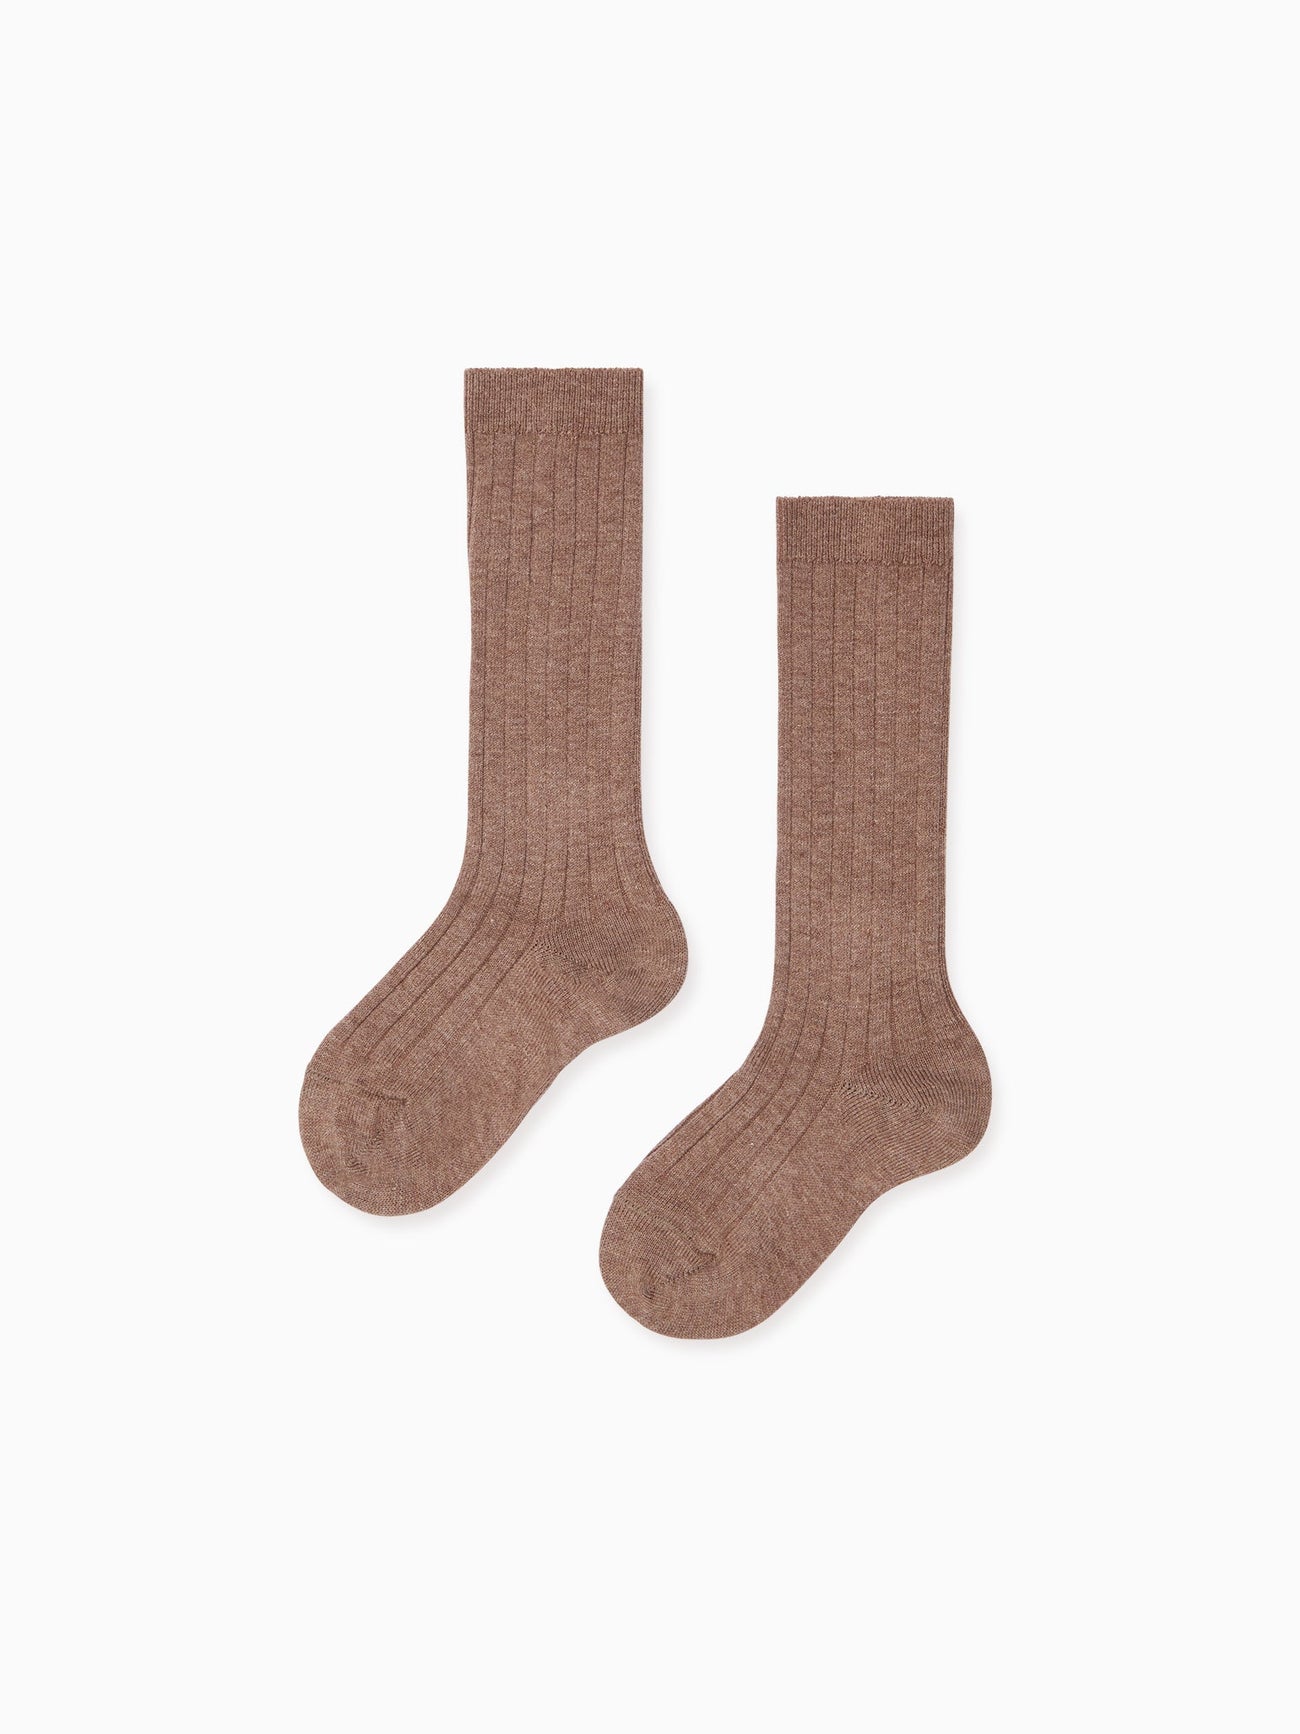 Soft Brown Ribbed Knee High Kids Socks